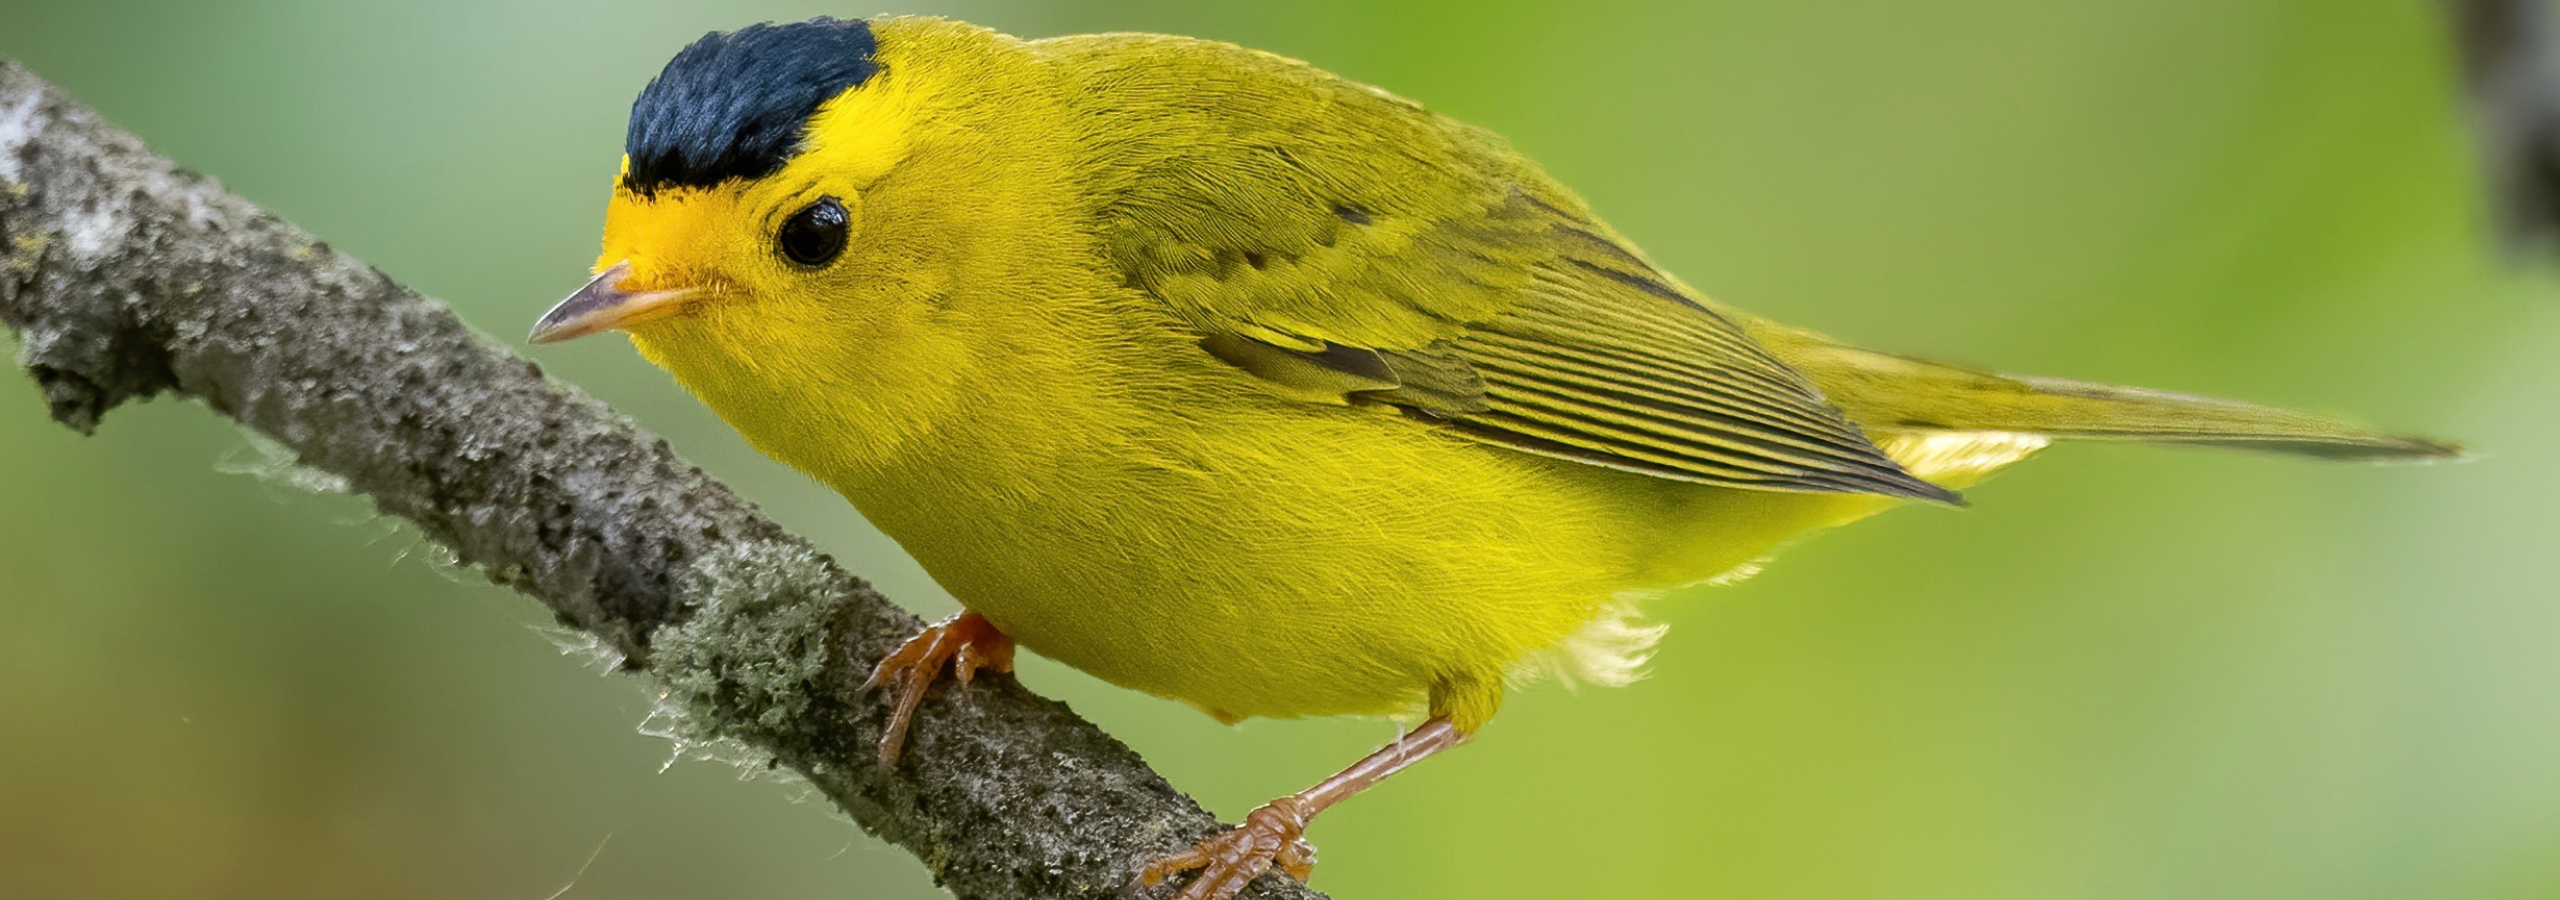 A yellow bird on a branch